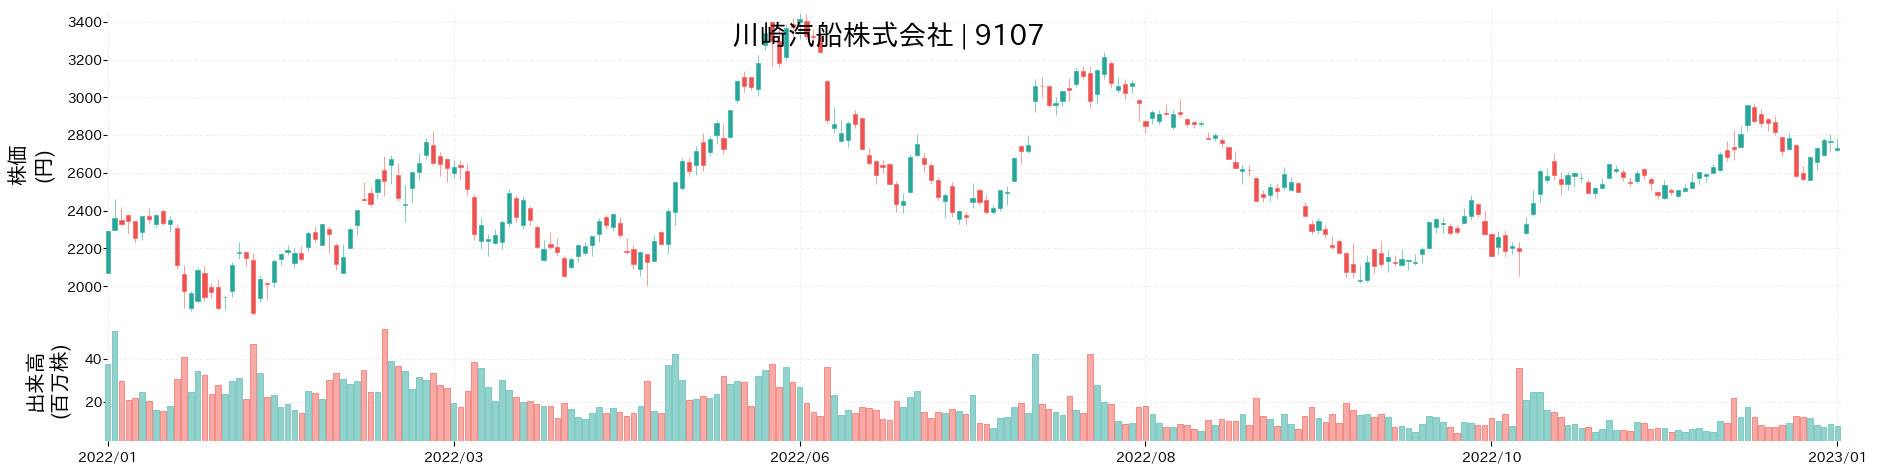 川崎汽船の株価推移(2022)